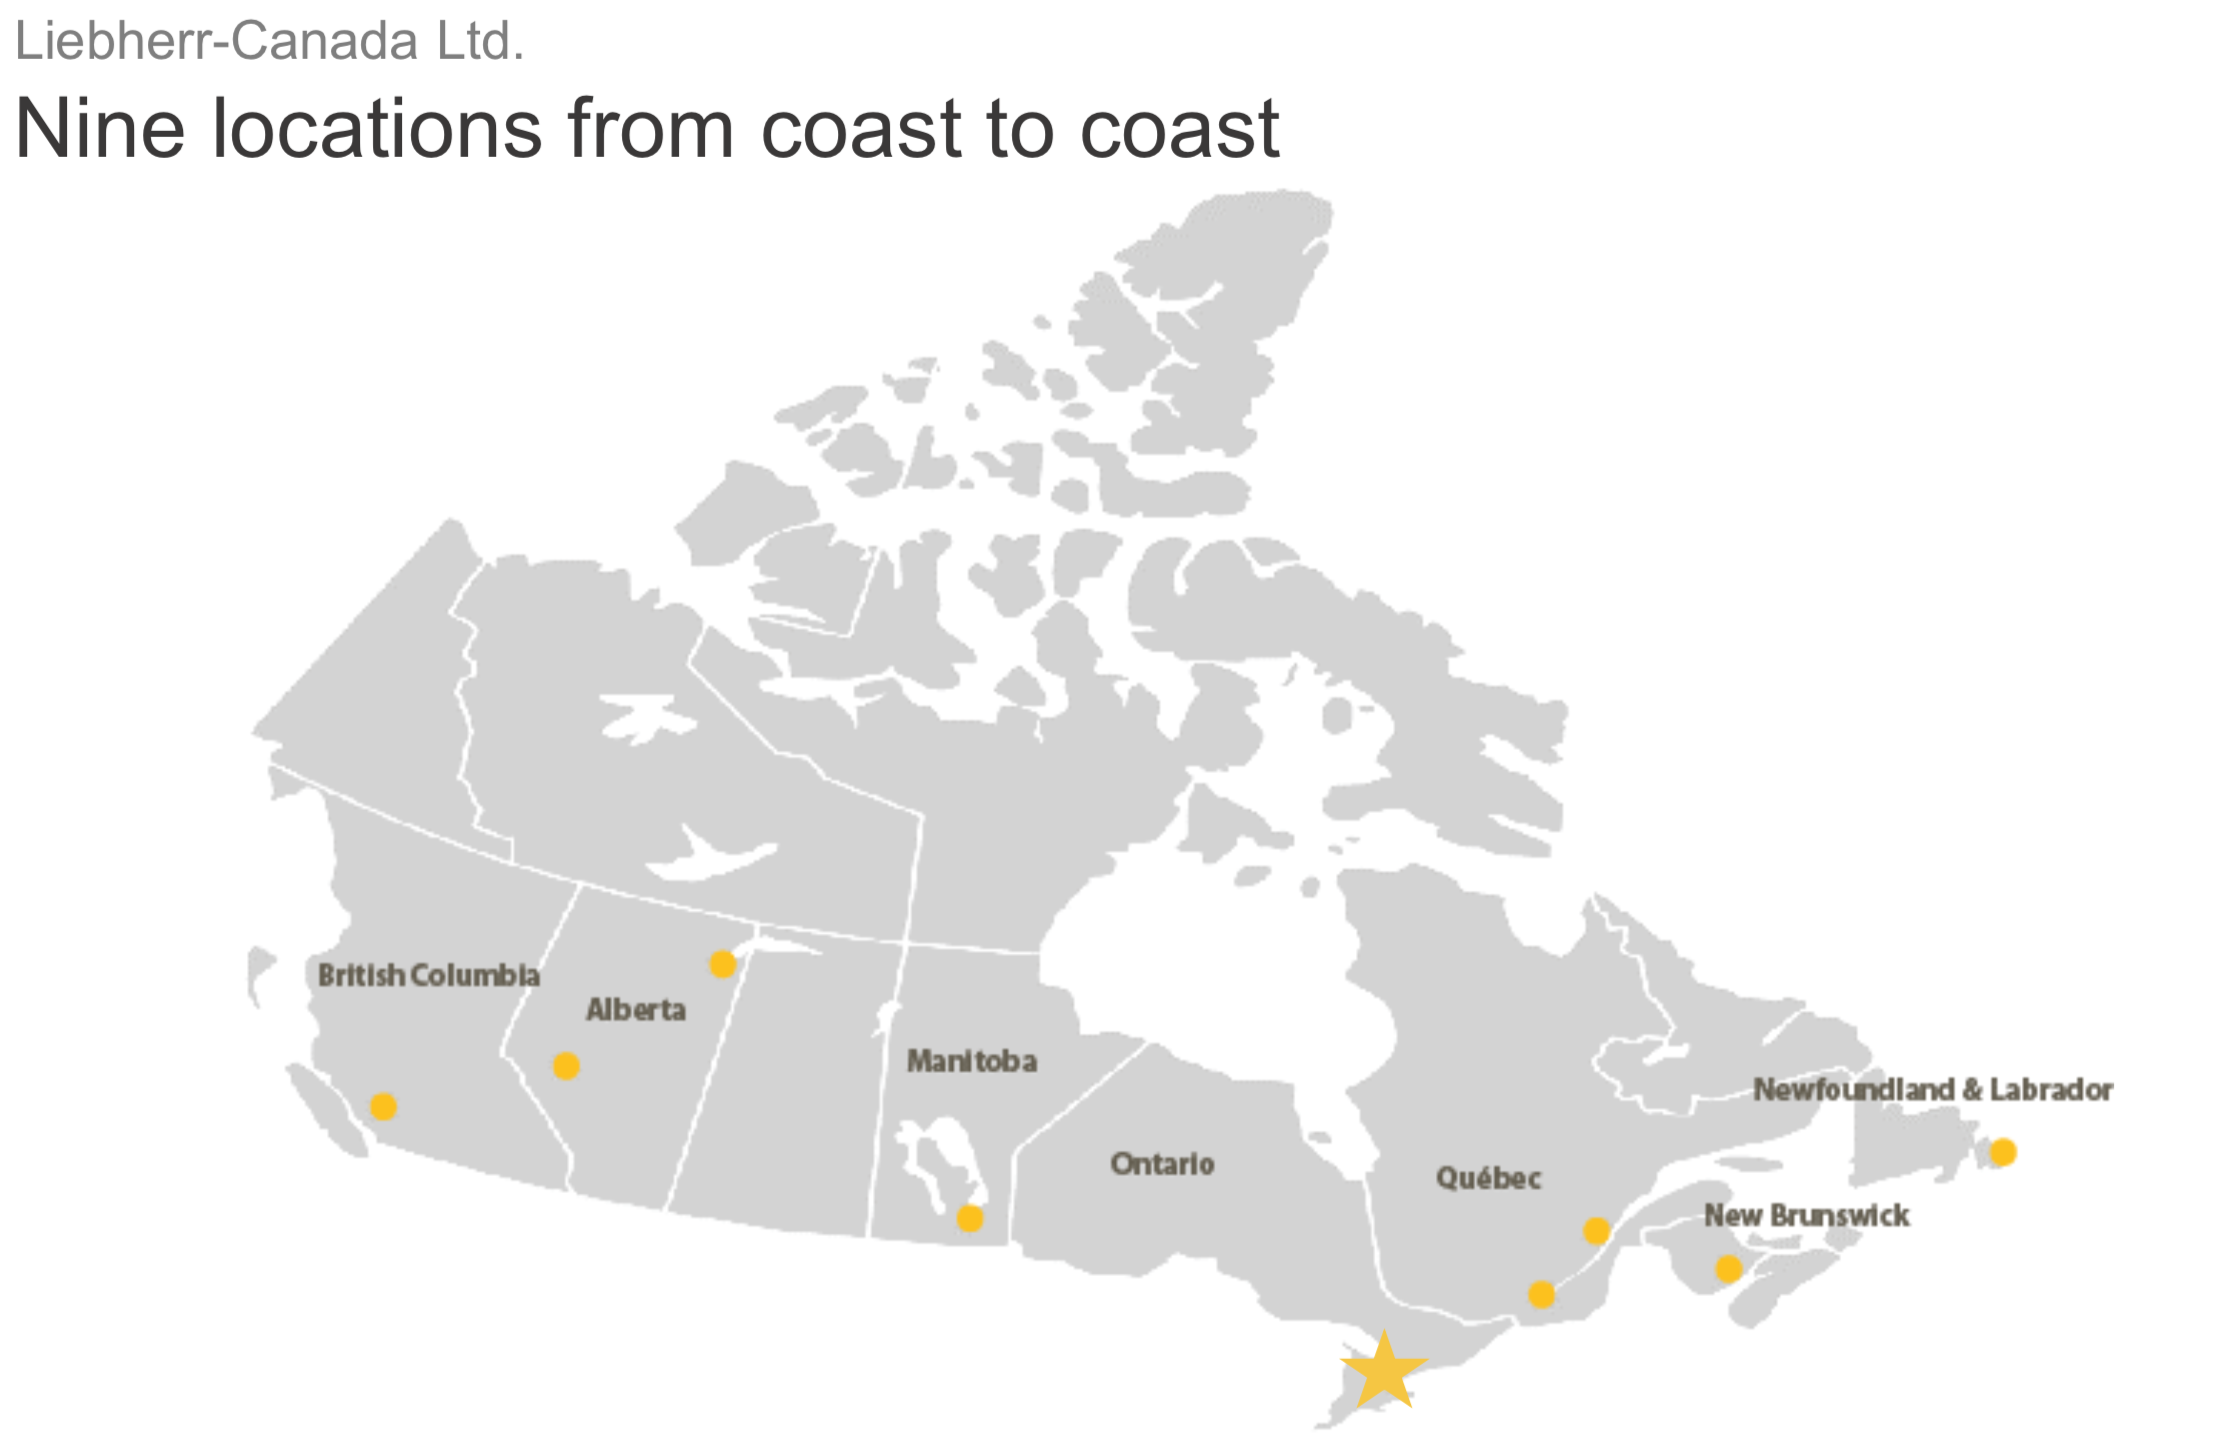 Liebherr-Canada Ltd. Canadian locations map